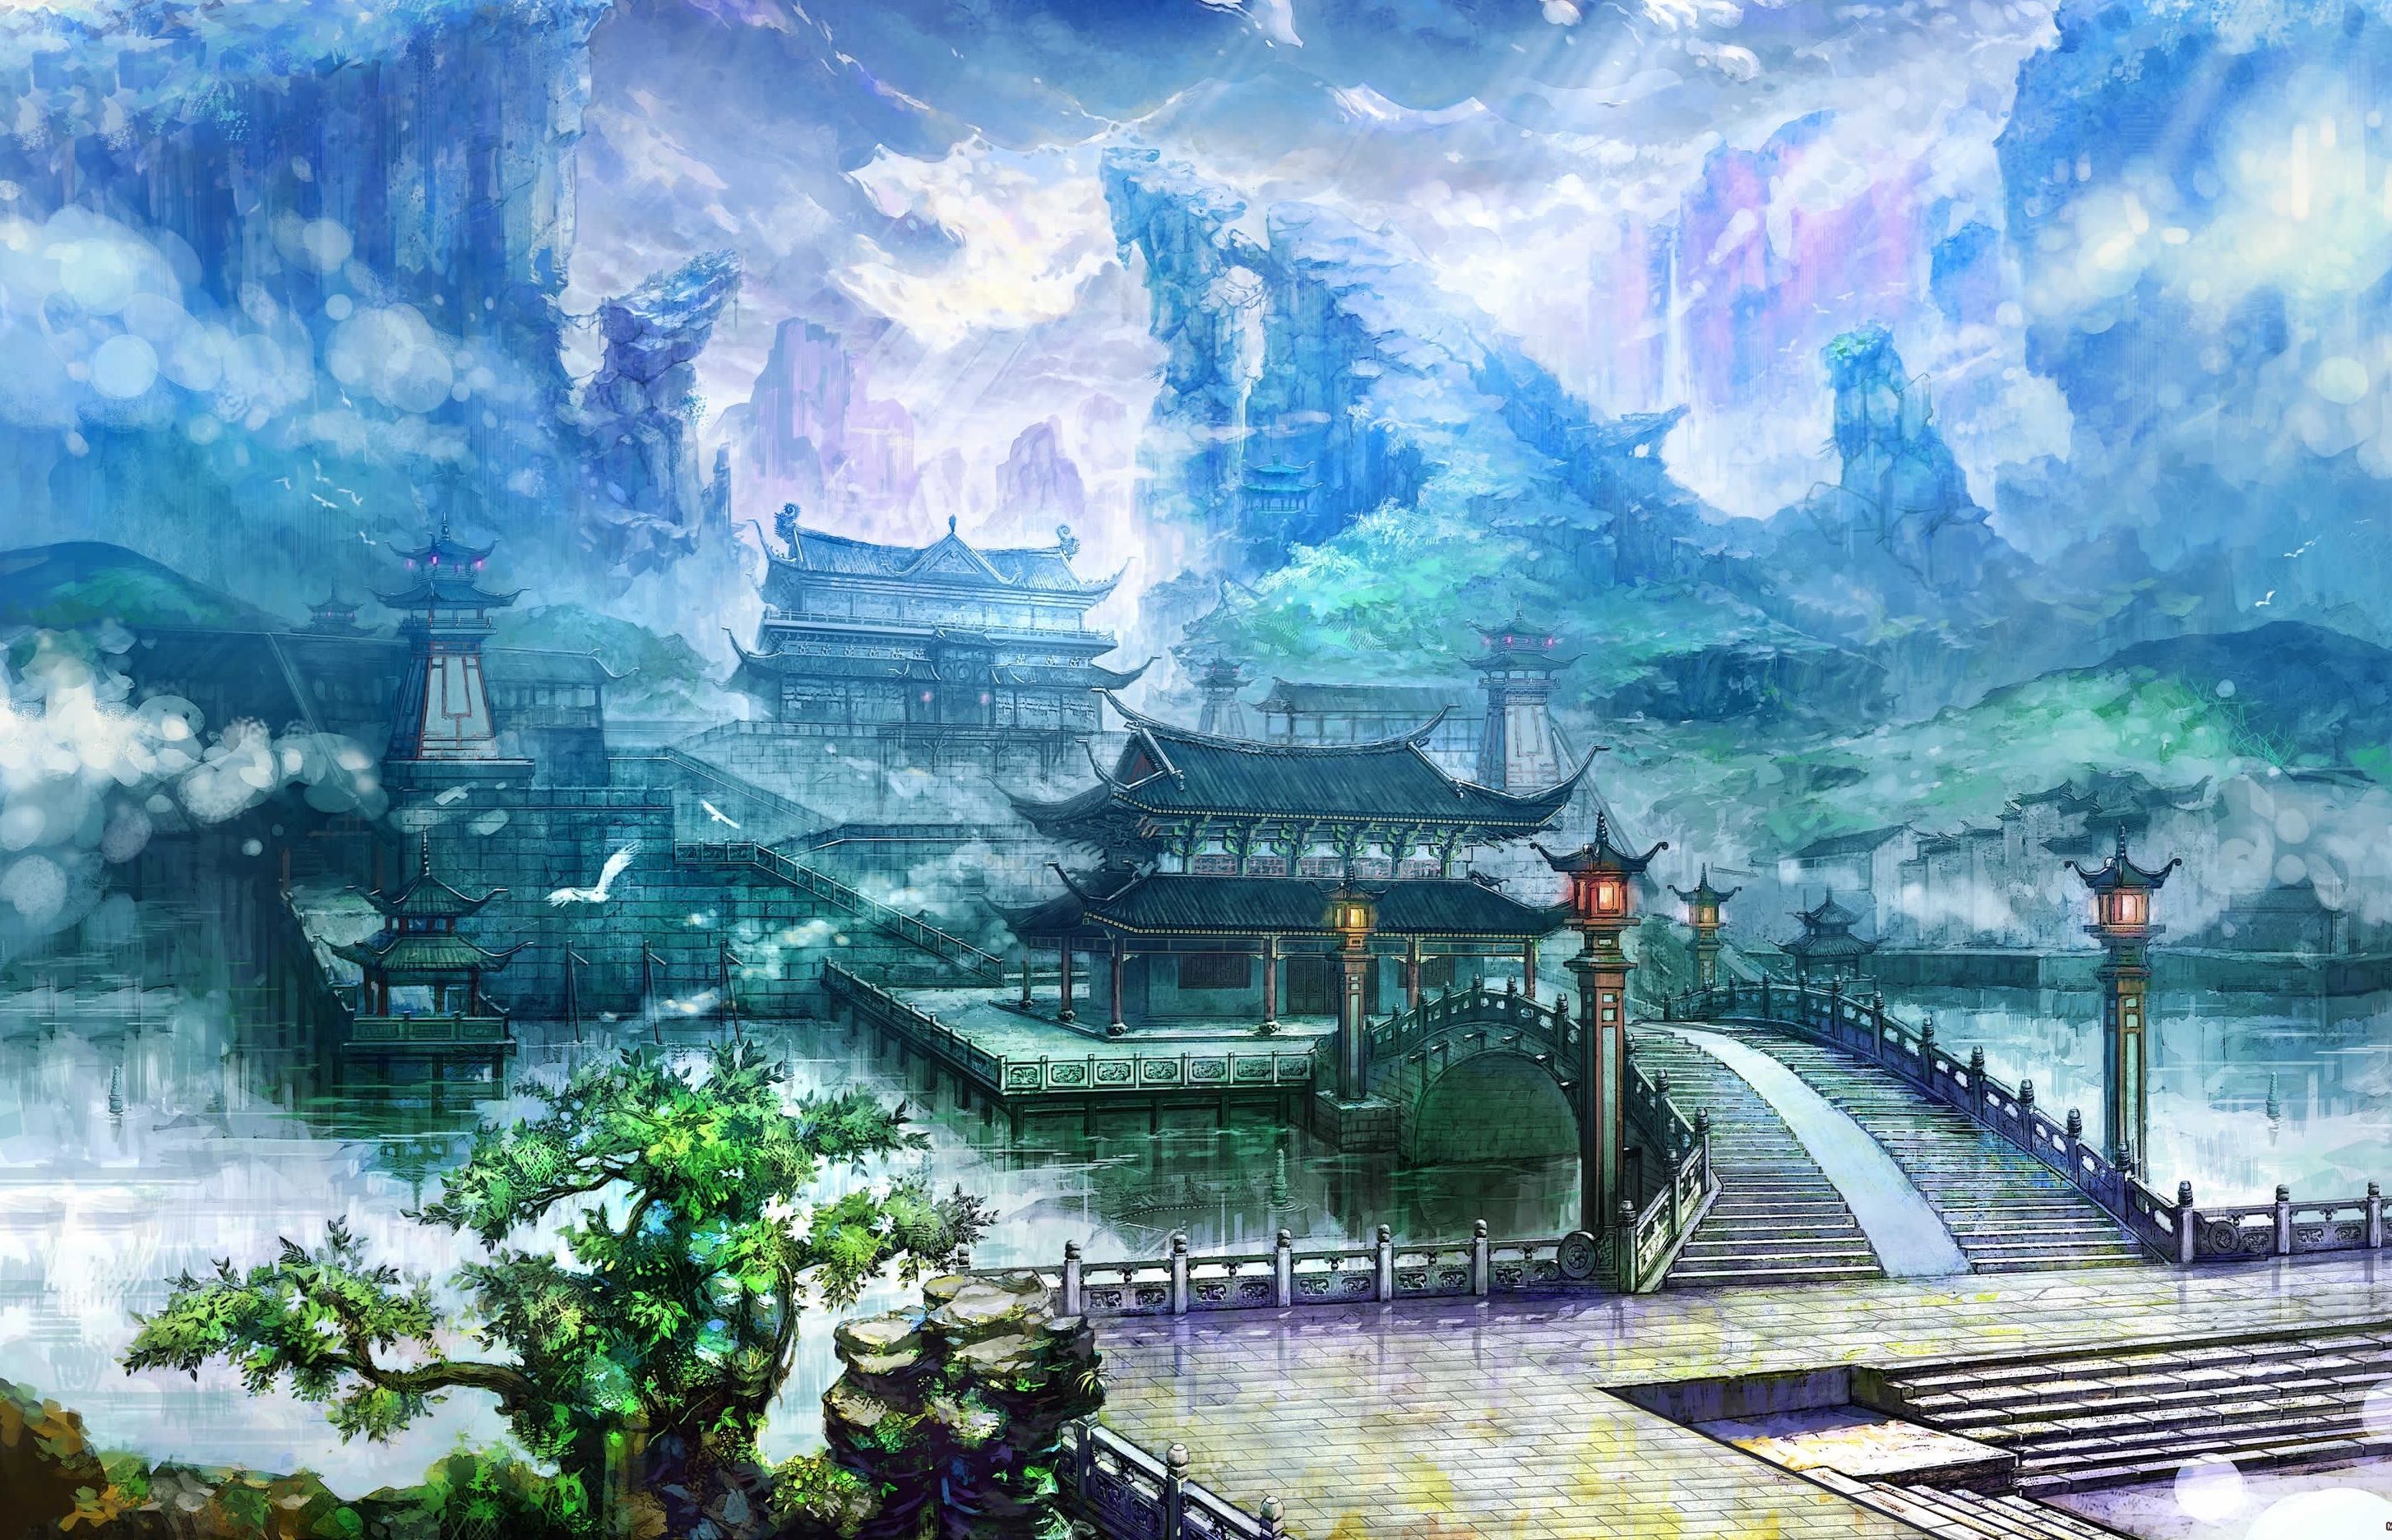 Chinese landscape, Chinese landscape painting, Fantasy landscape